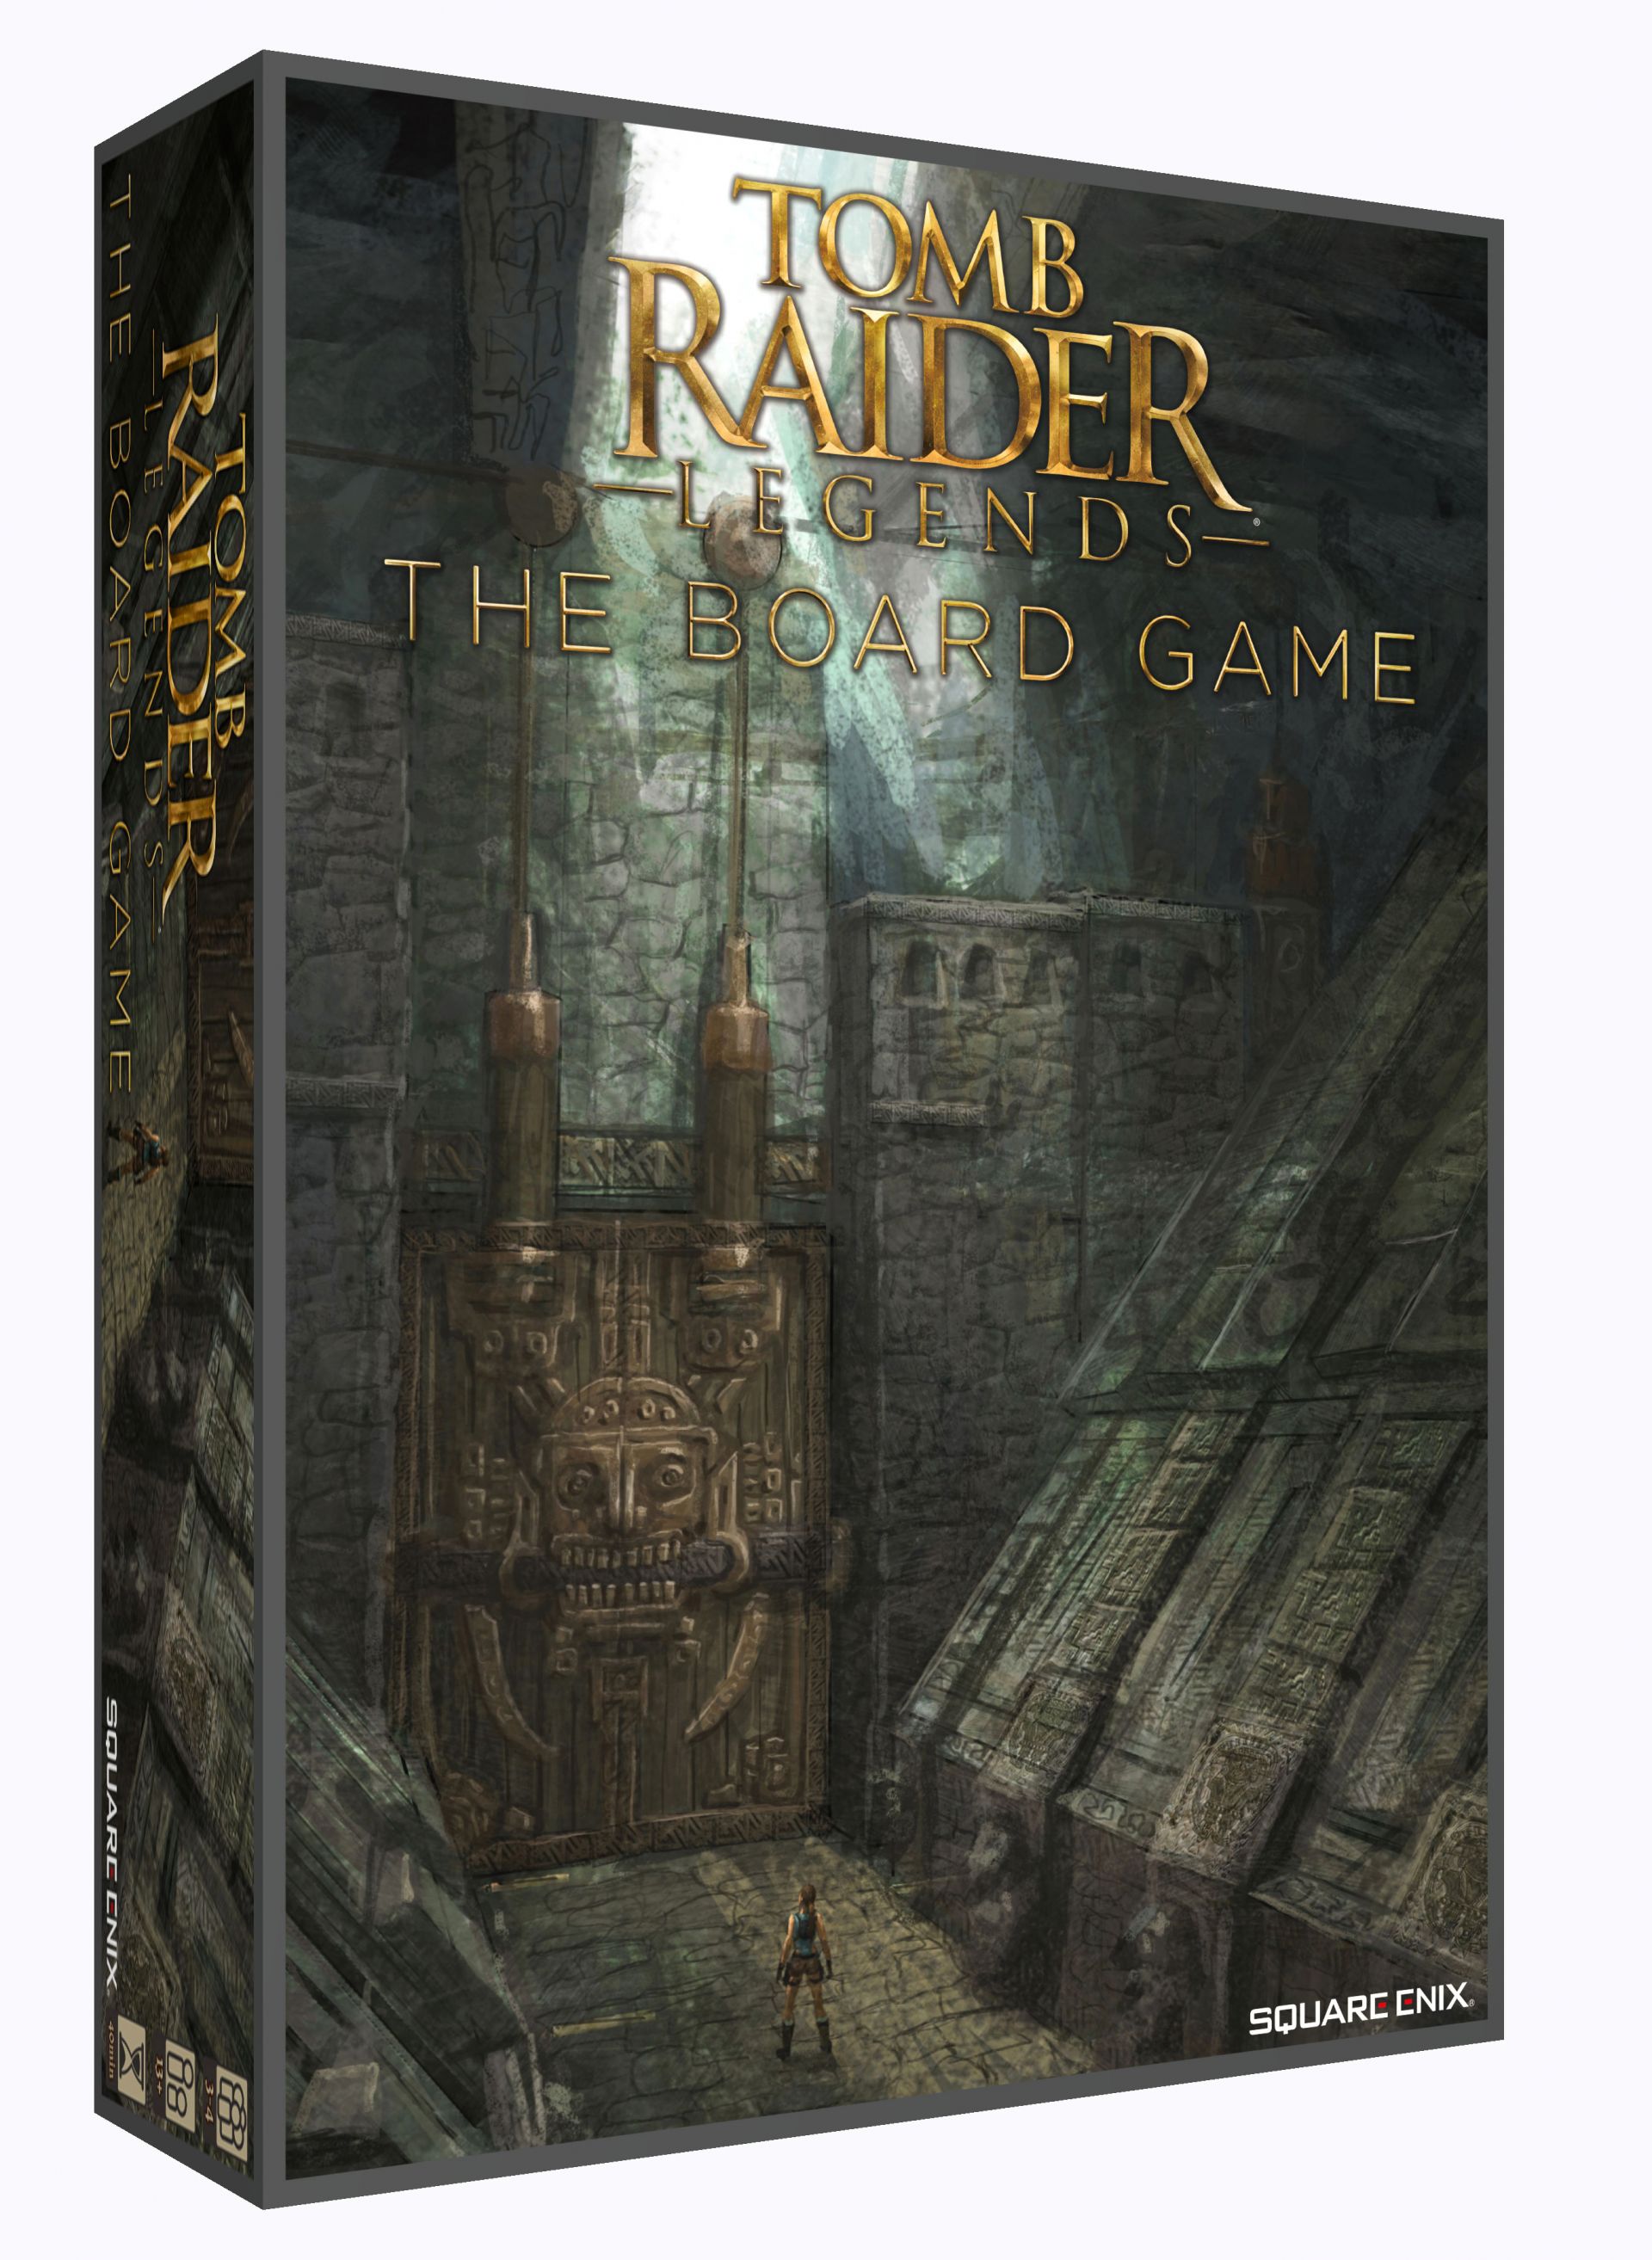 Tomb raider legends 1